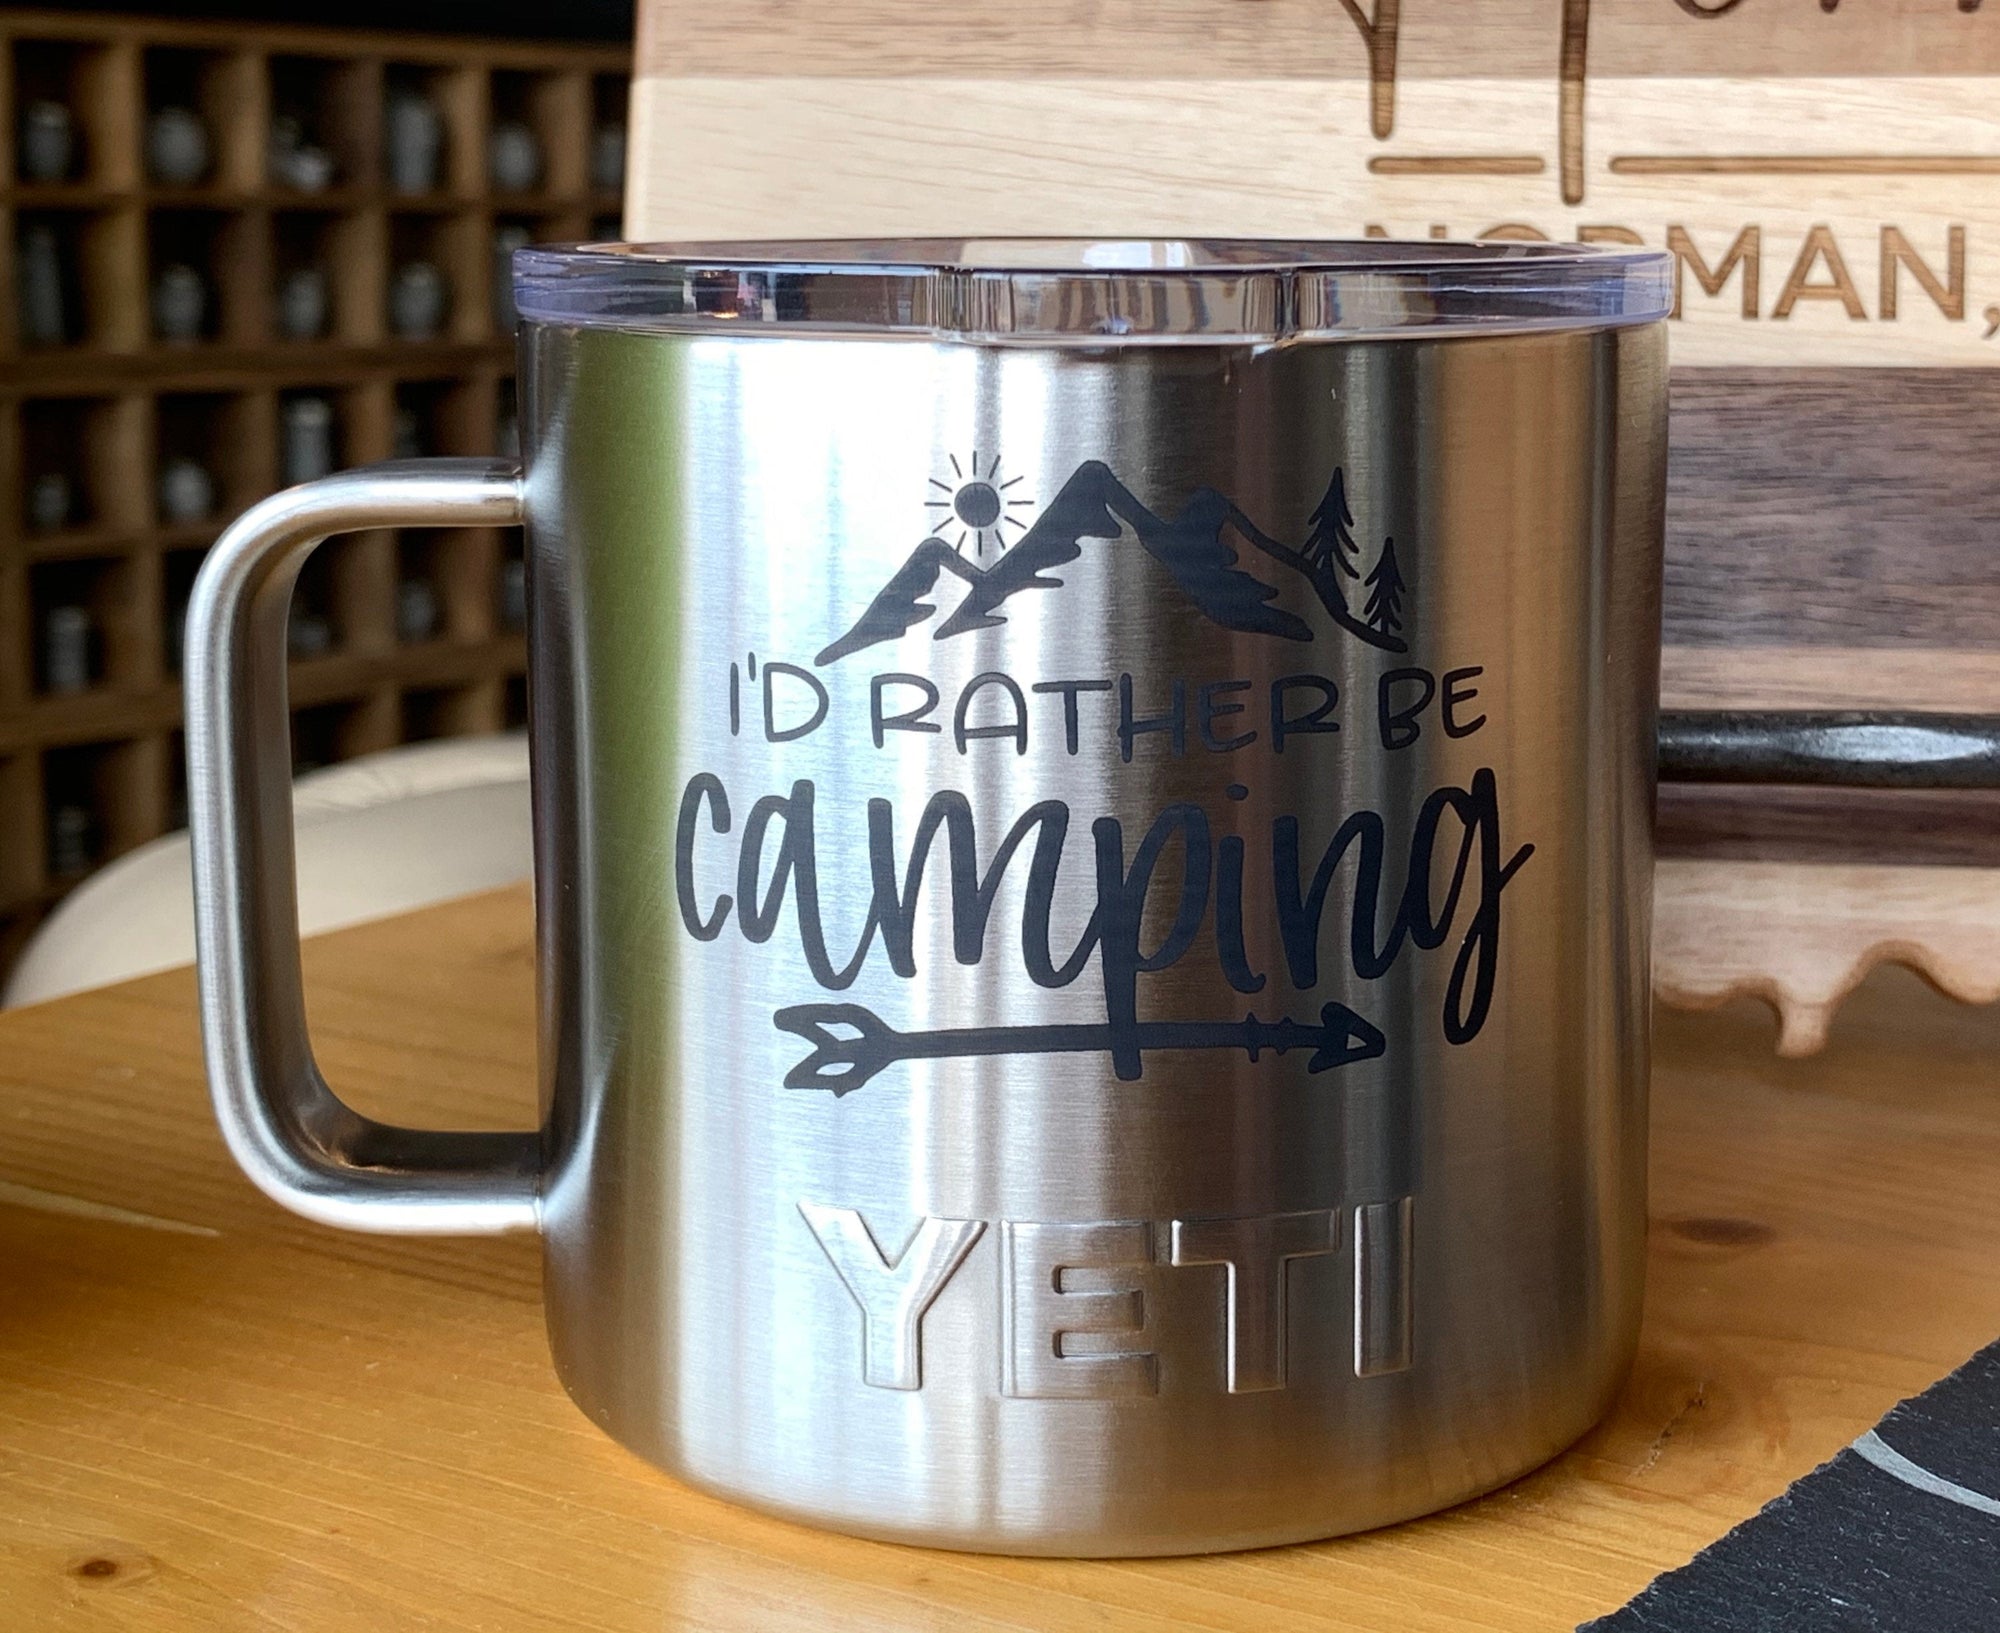 Yeti 14 Ounce Rambler Mug Is Ideal Camp-to-Kitchen Gear